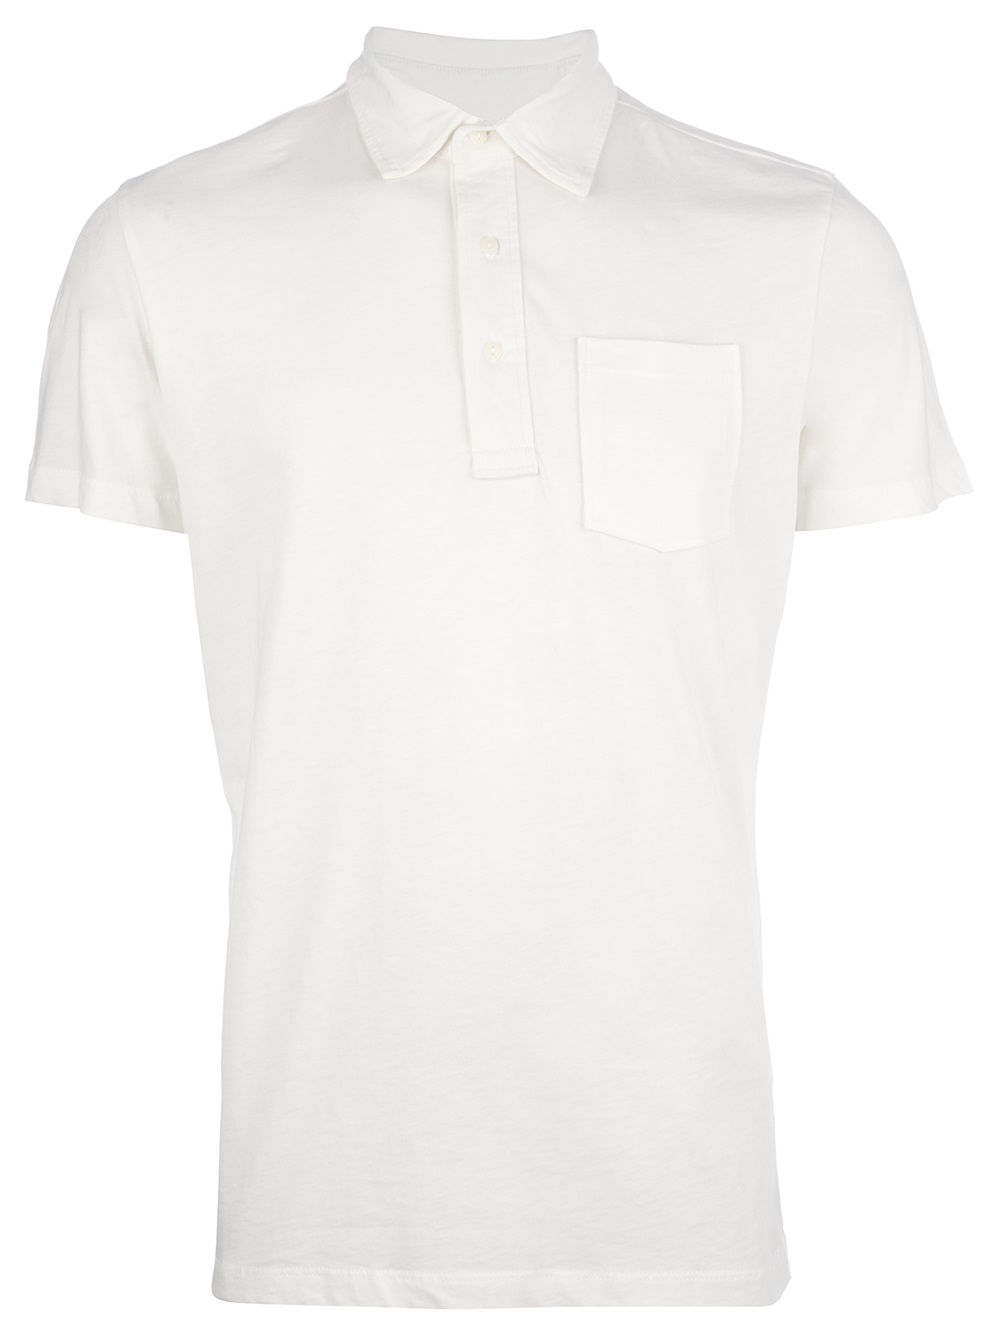 Lyst - B.D. Baggies Pocket Polo Shirt in White for Men